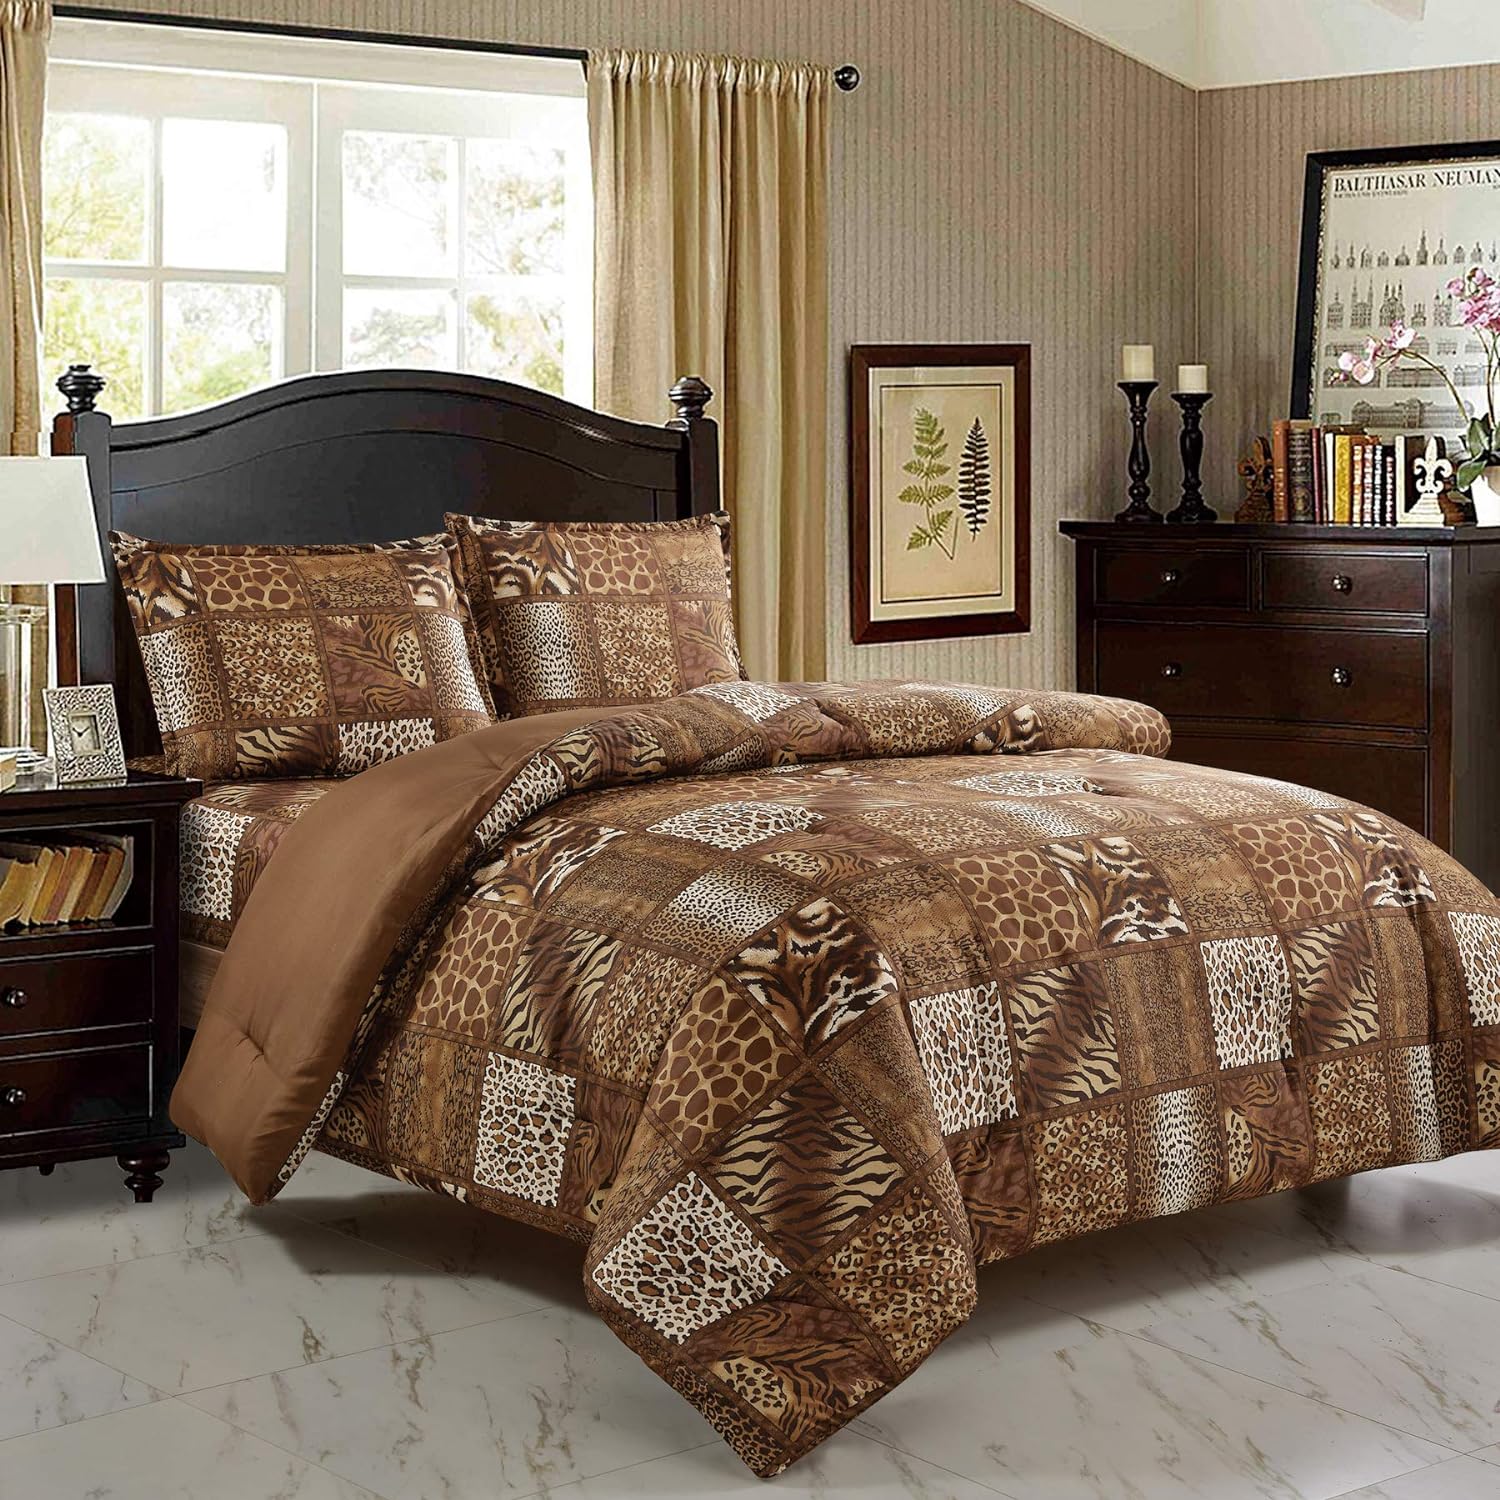 TKM Home 3 Piece Animal Print Comforter With Pillow Sham, Chocolate Brown Leopard  Zebra Giraffe Jungle